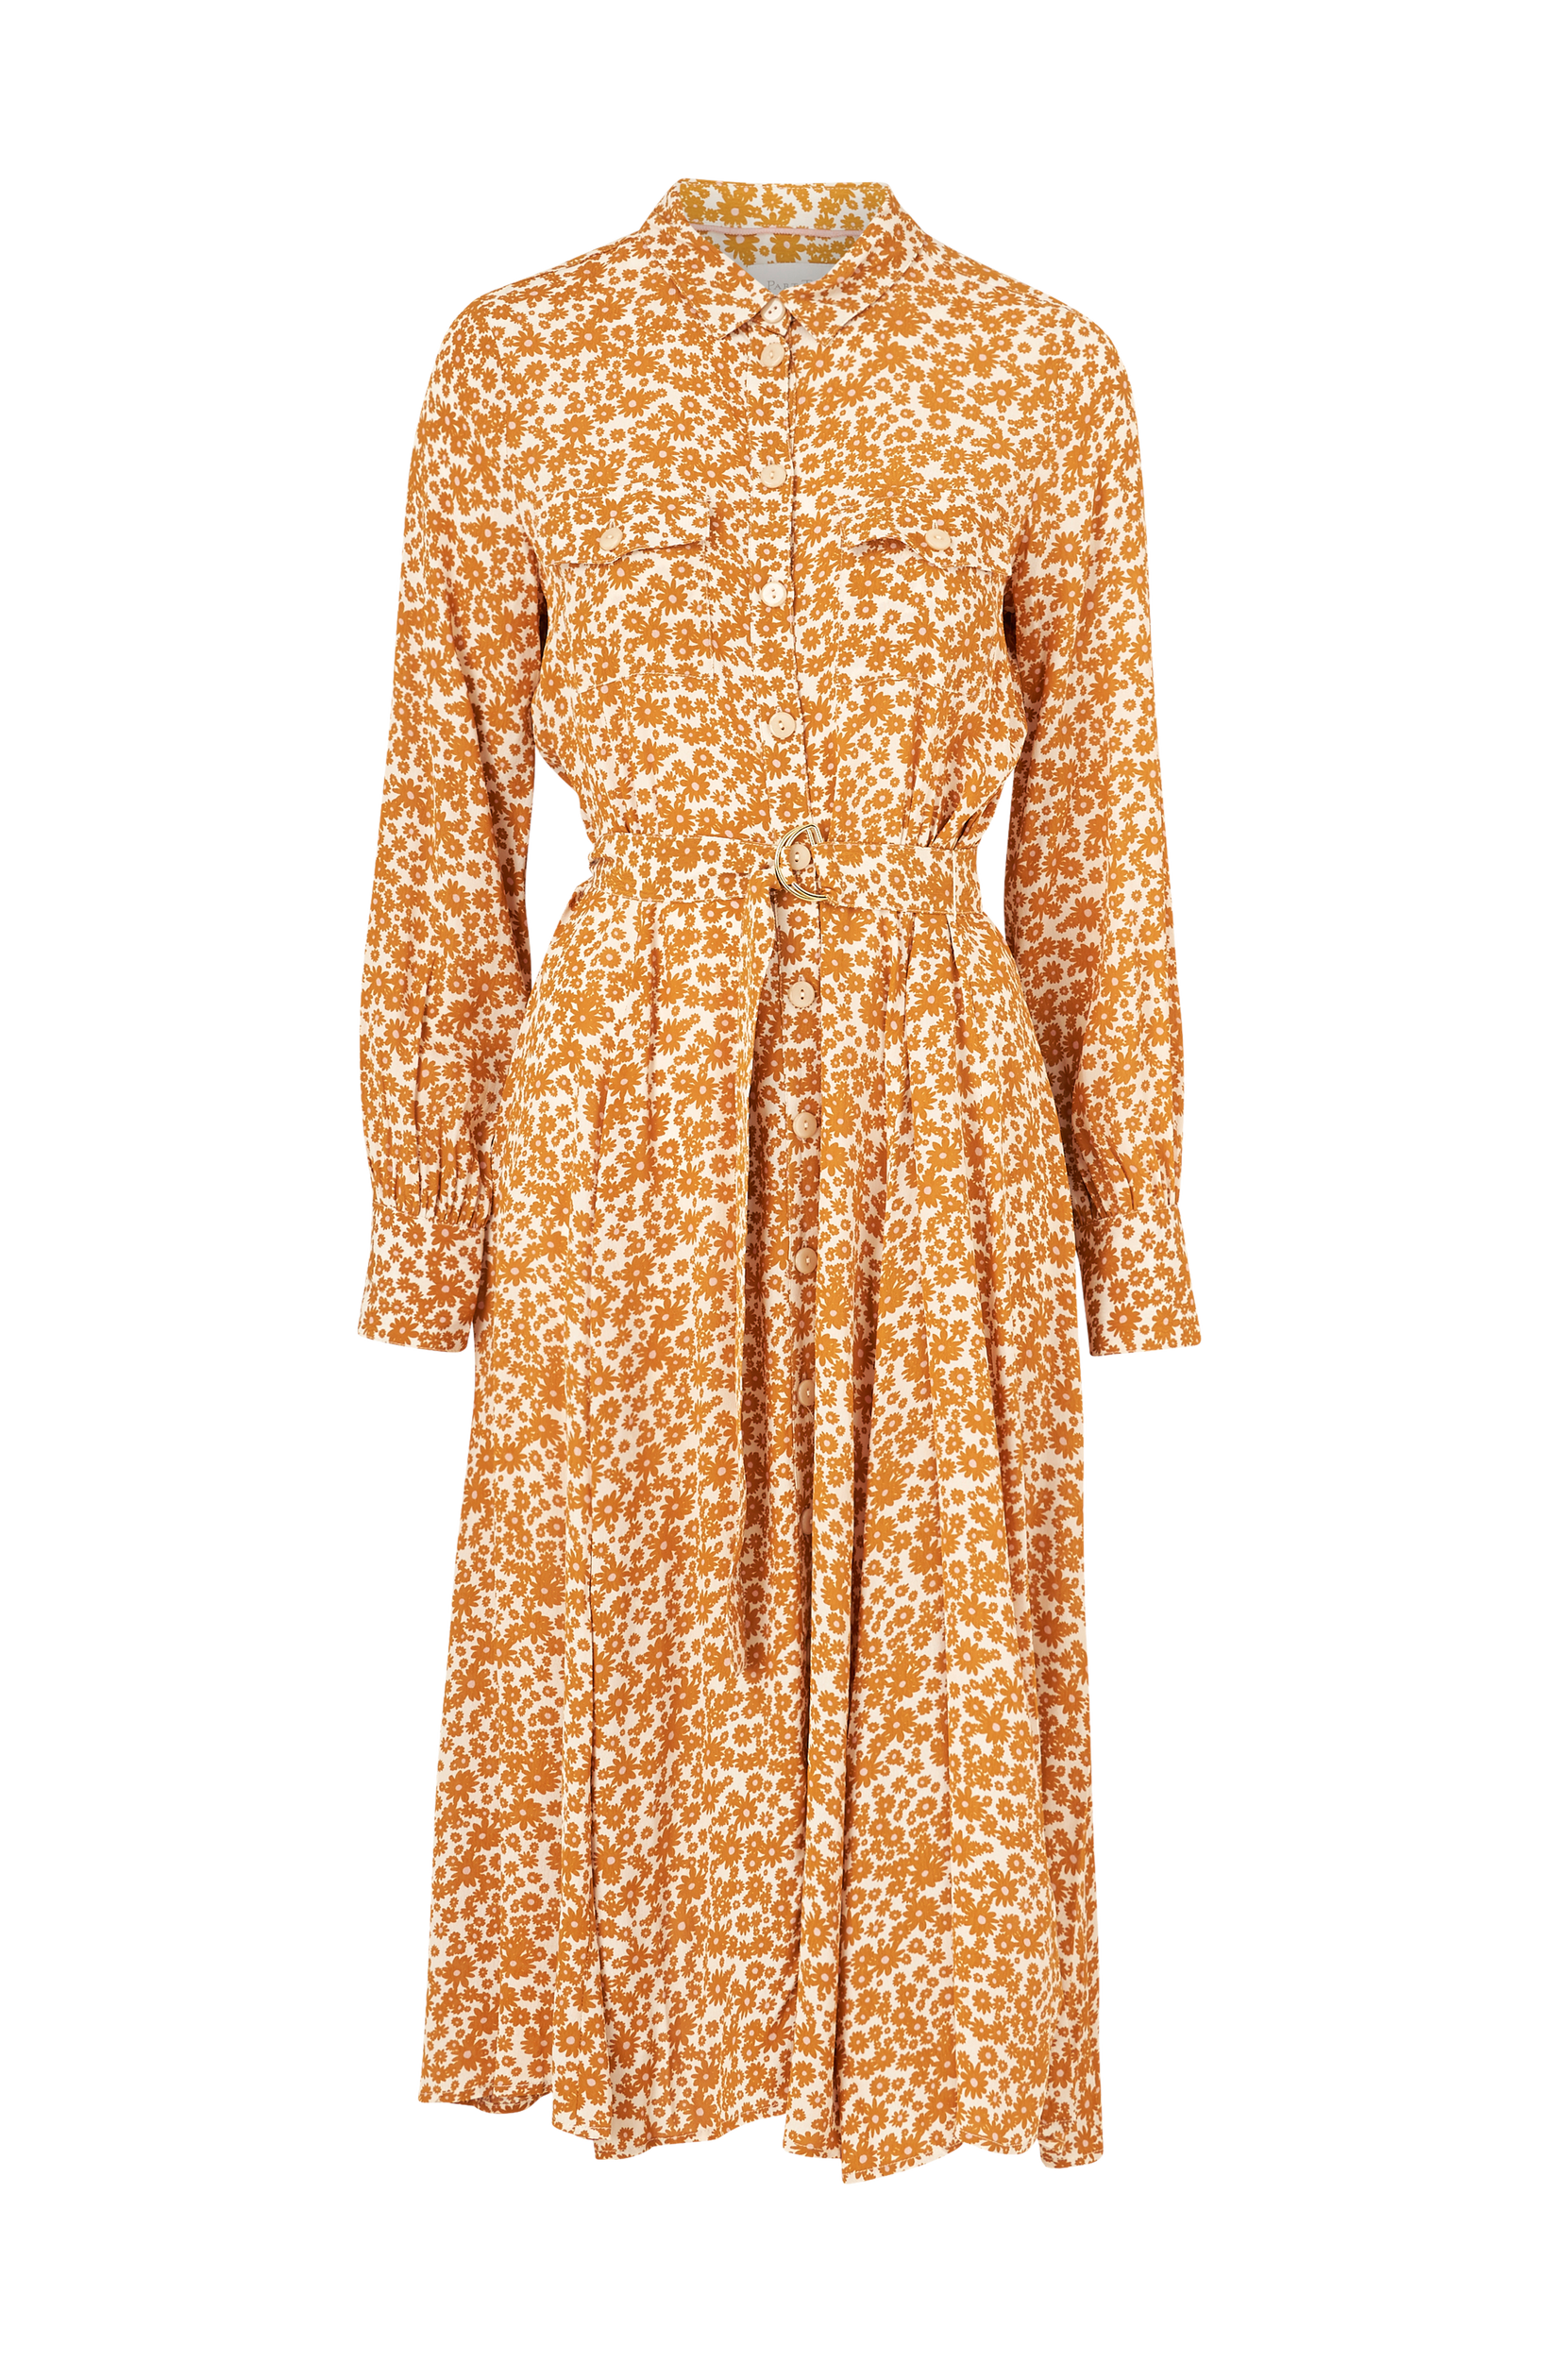 Paitamekko Truee Dress, Part Two